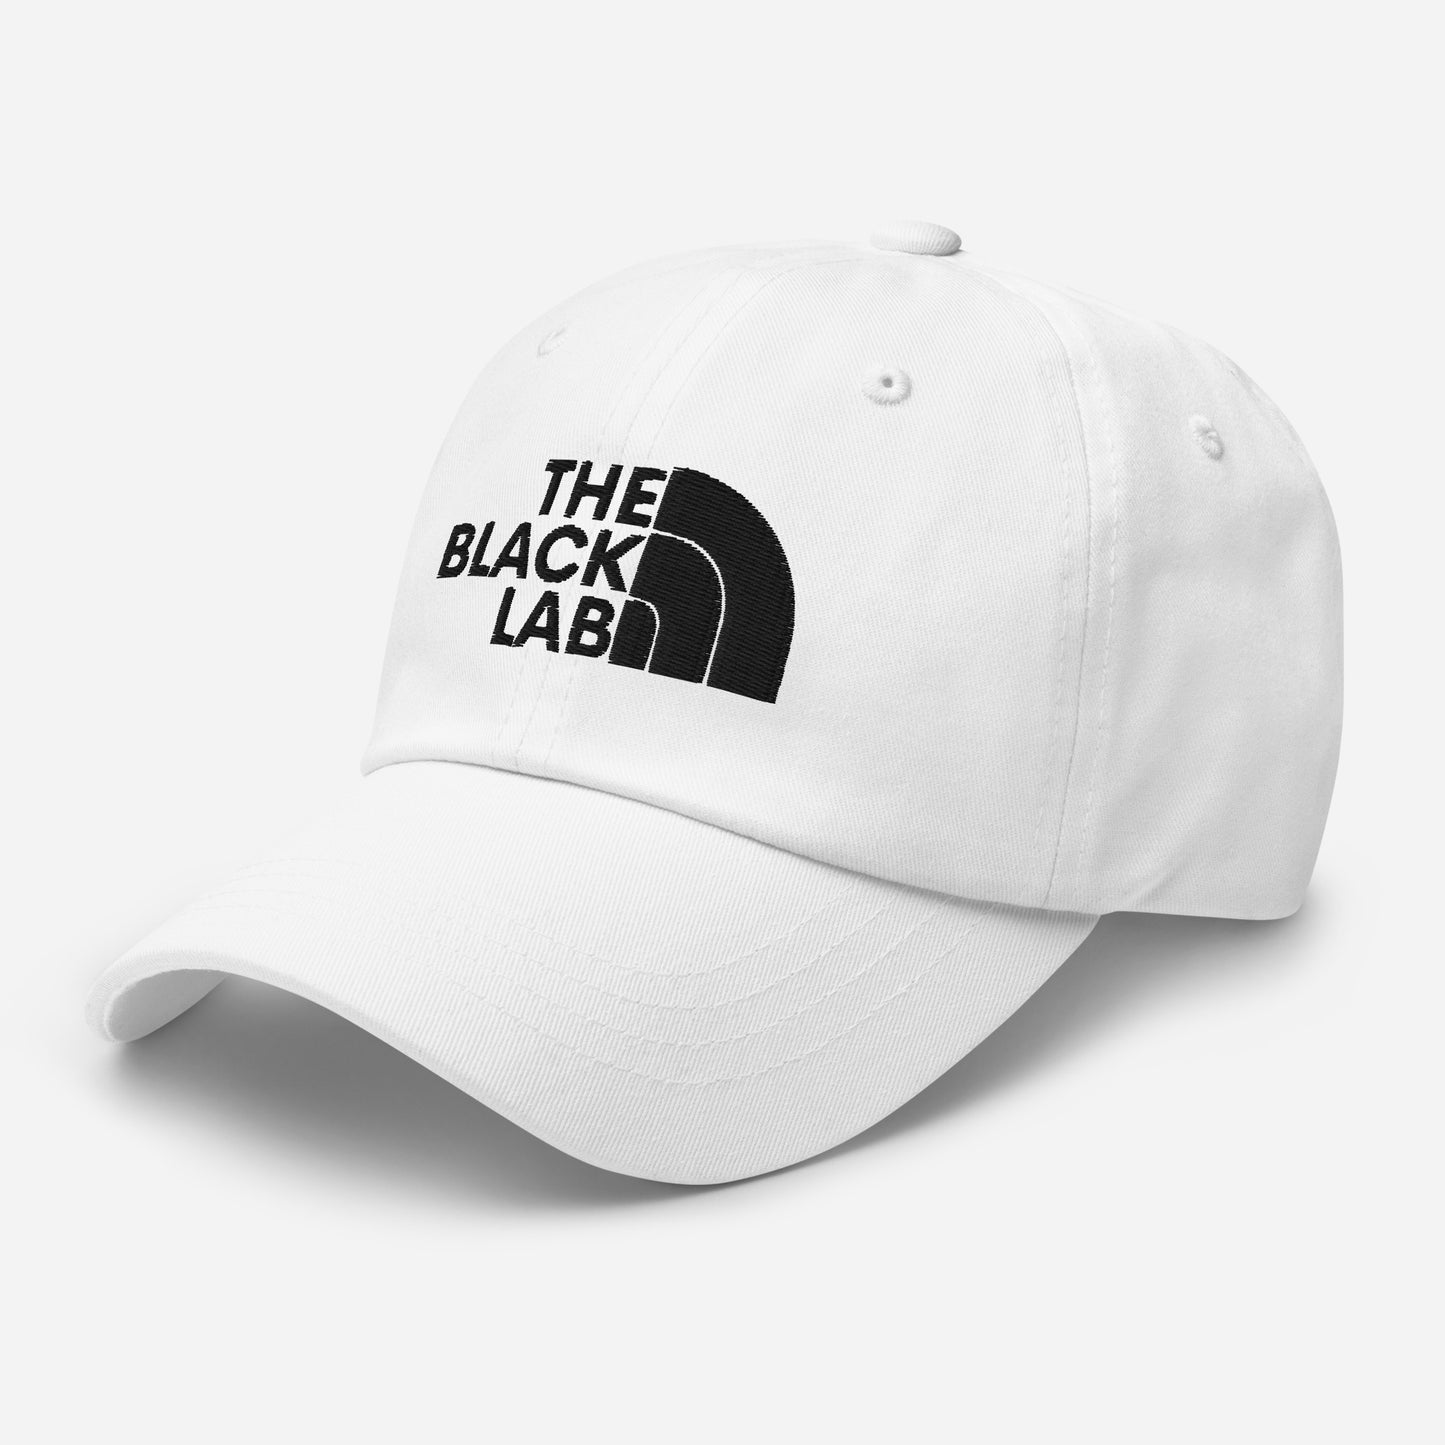 The Black Lab Dad hat